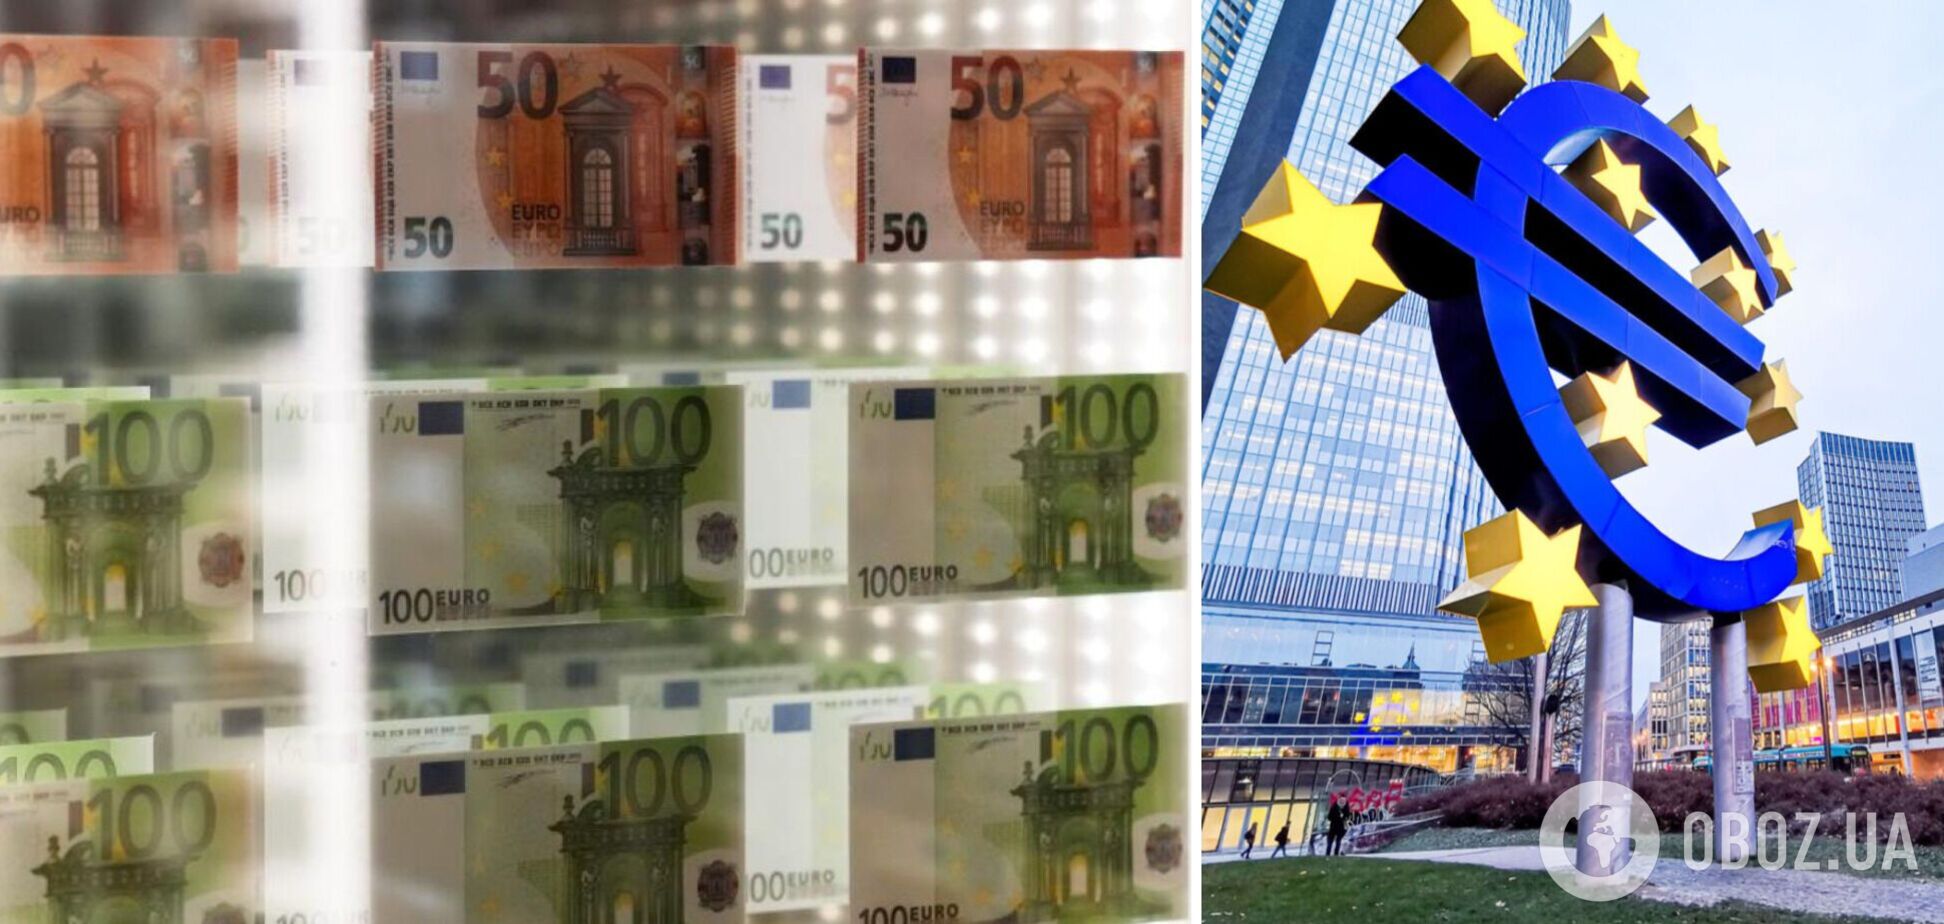 ЕЦБ затеял реформу дизайна евро